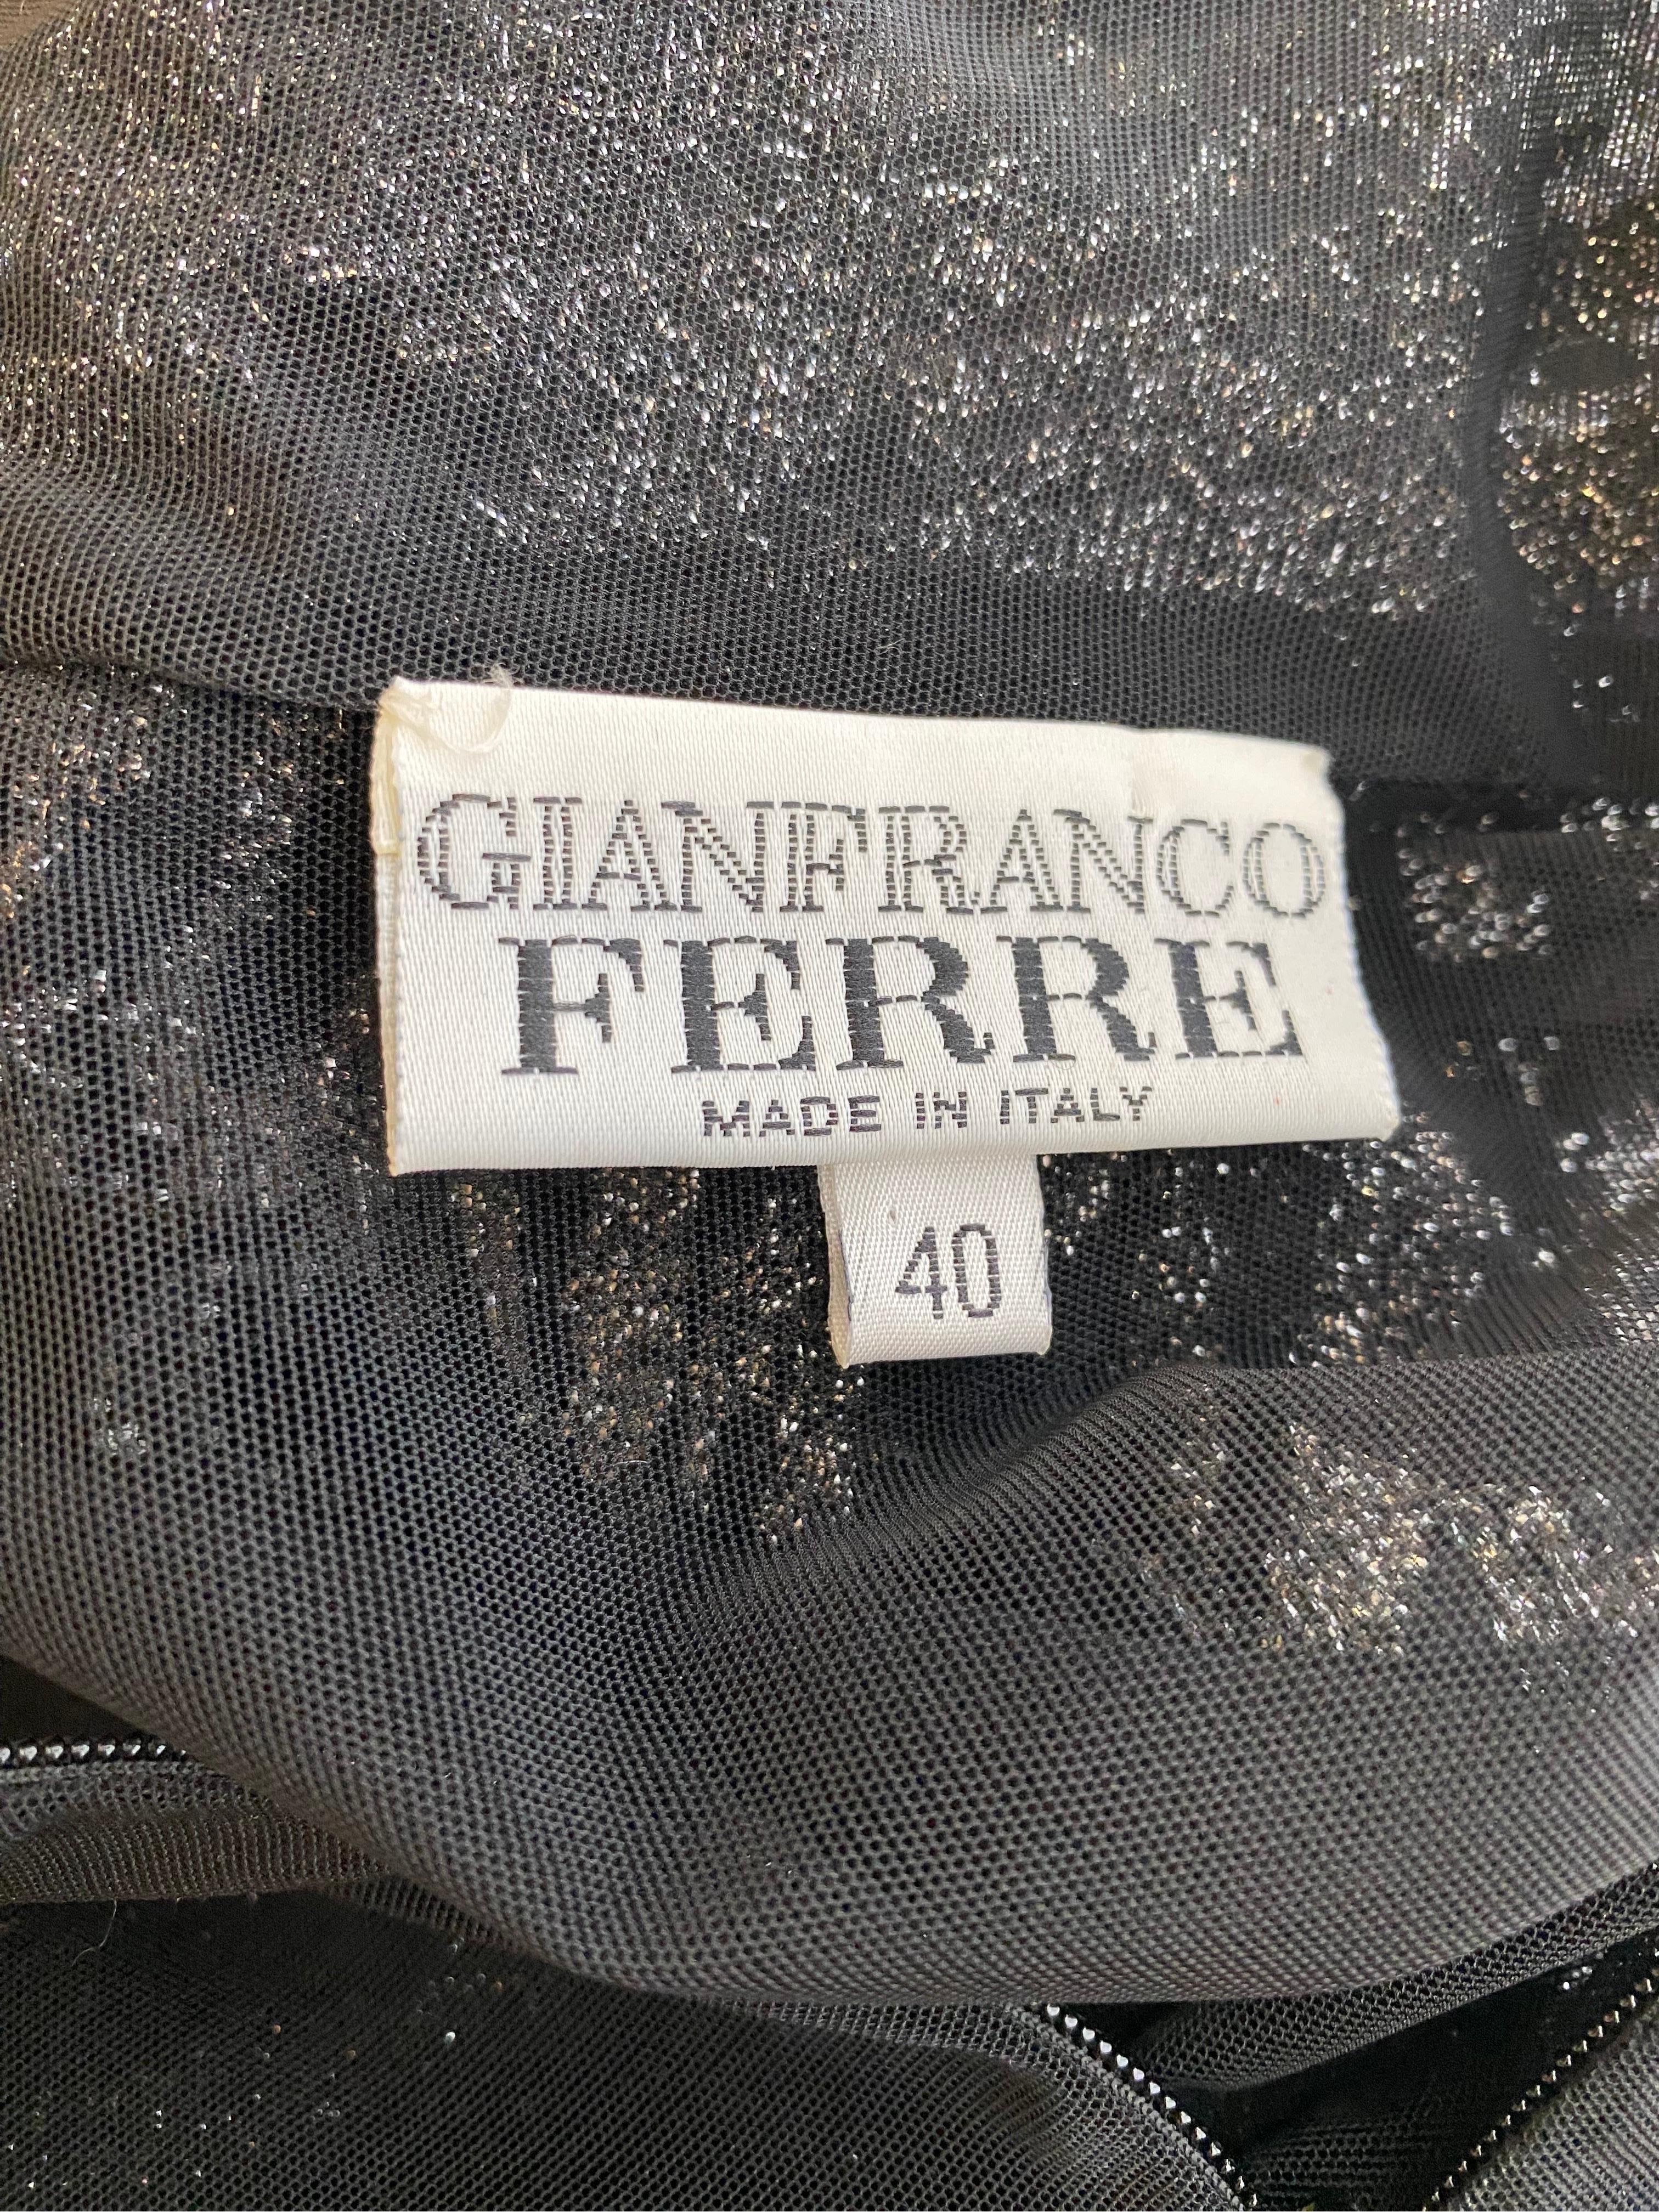 Women's 90s Gianfranco Ferre Sheer Metallic Grey Cocktail Dress For Sale